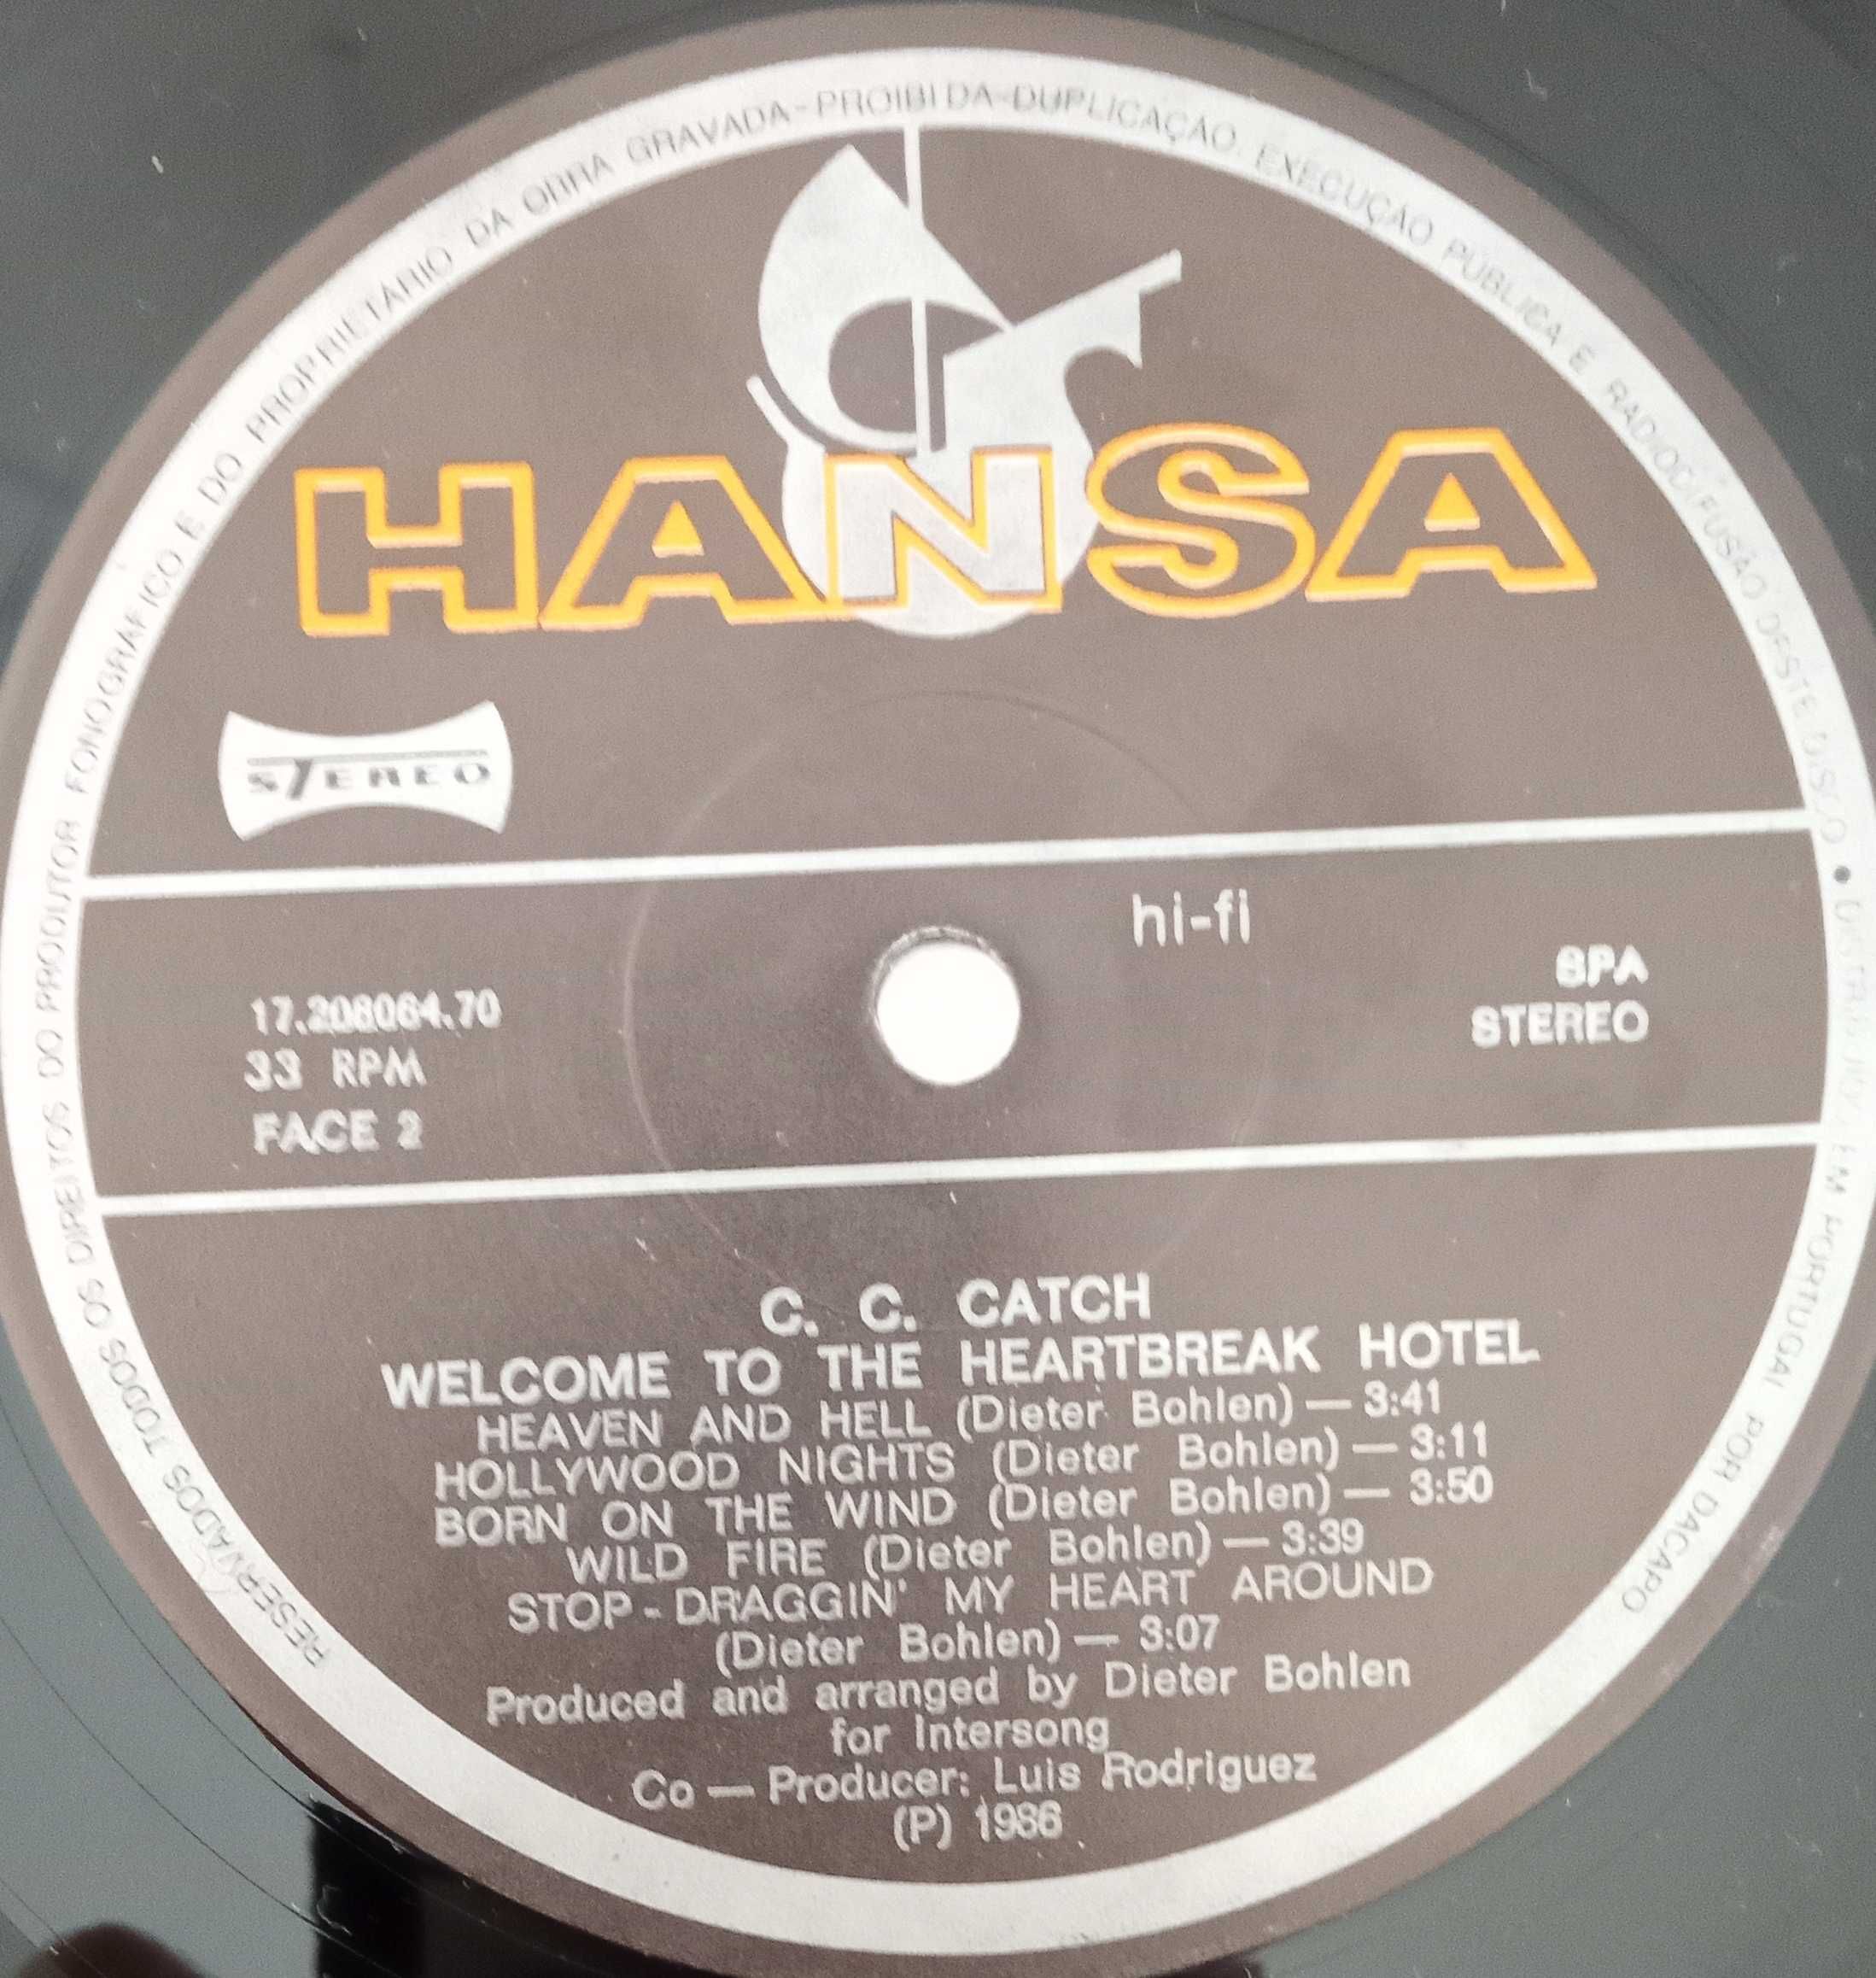 Vinil, C. C. Catch - Welcome to the hearbreak hotel, LP por 5€